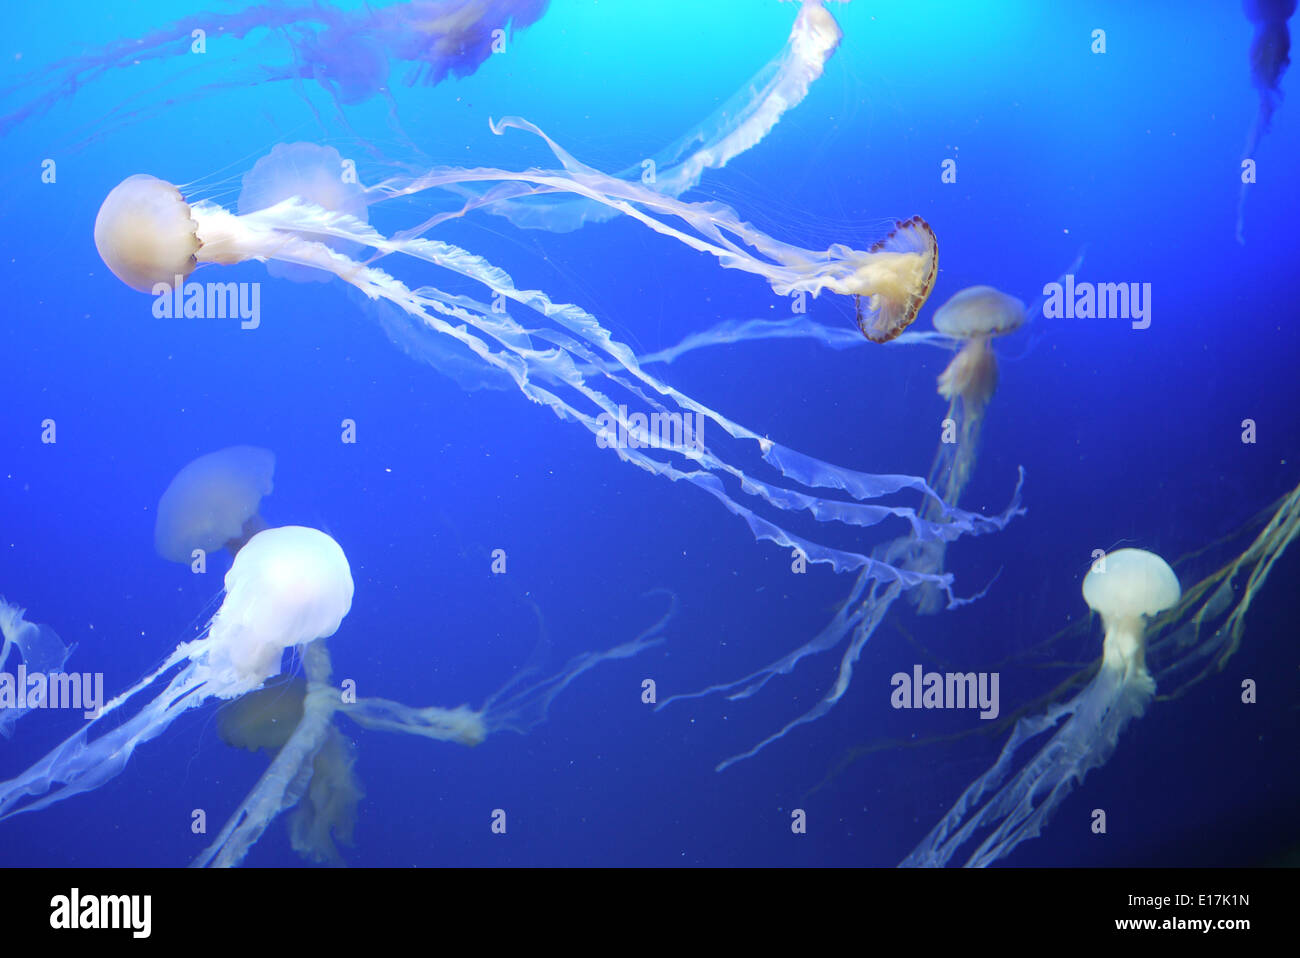 Group of jellyfish swimming in the sea aquarium Stock Photo